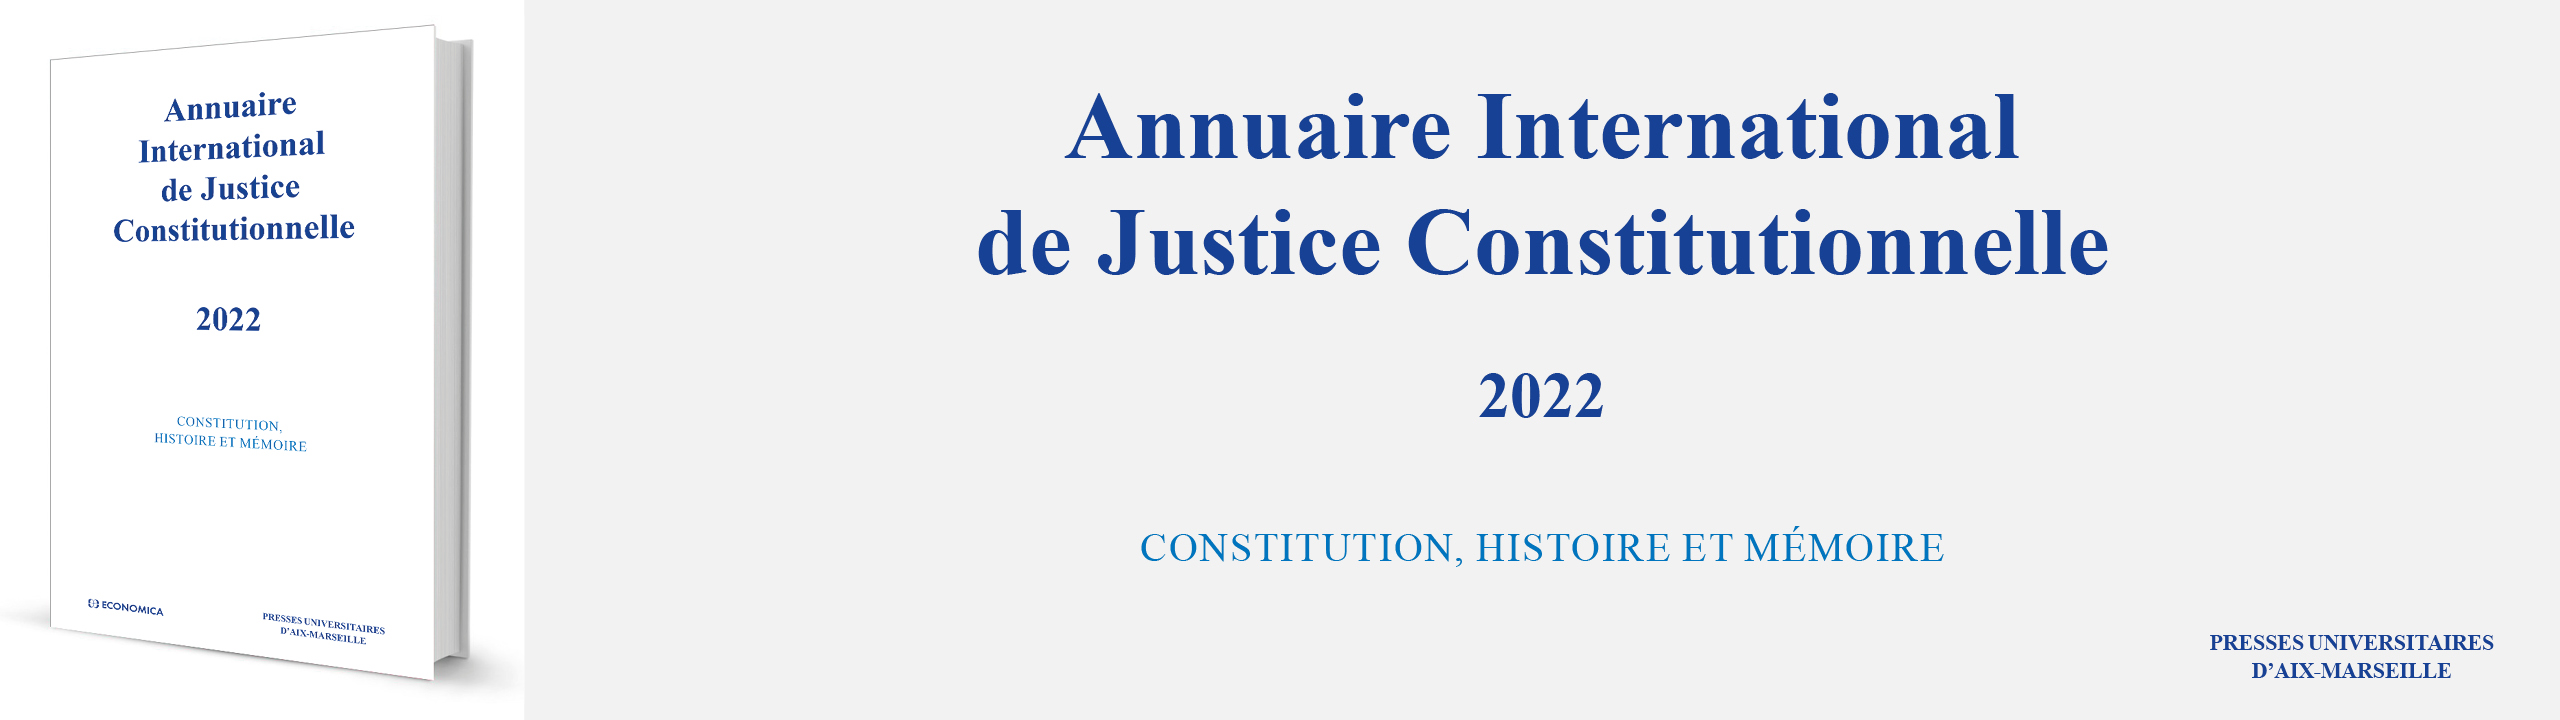 Annuaire international de justice constitutionnelle, volume XXXVIII, 2022 - 9782717872743